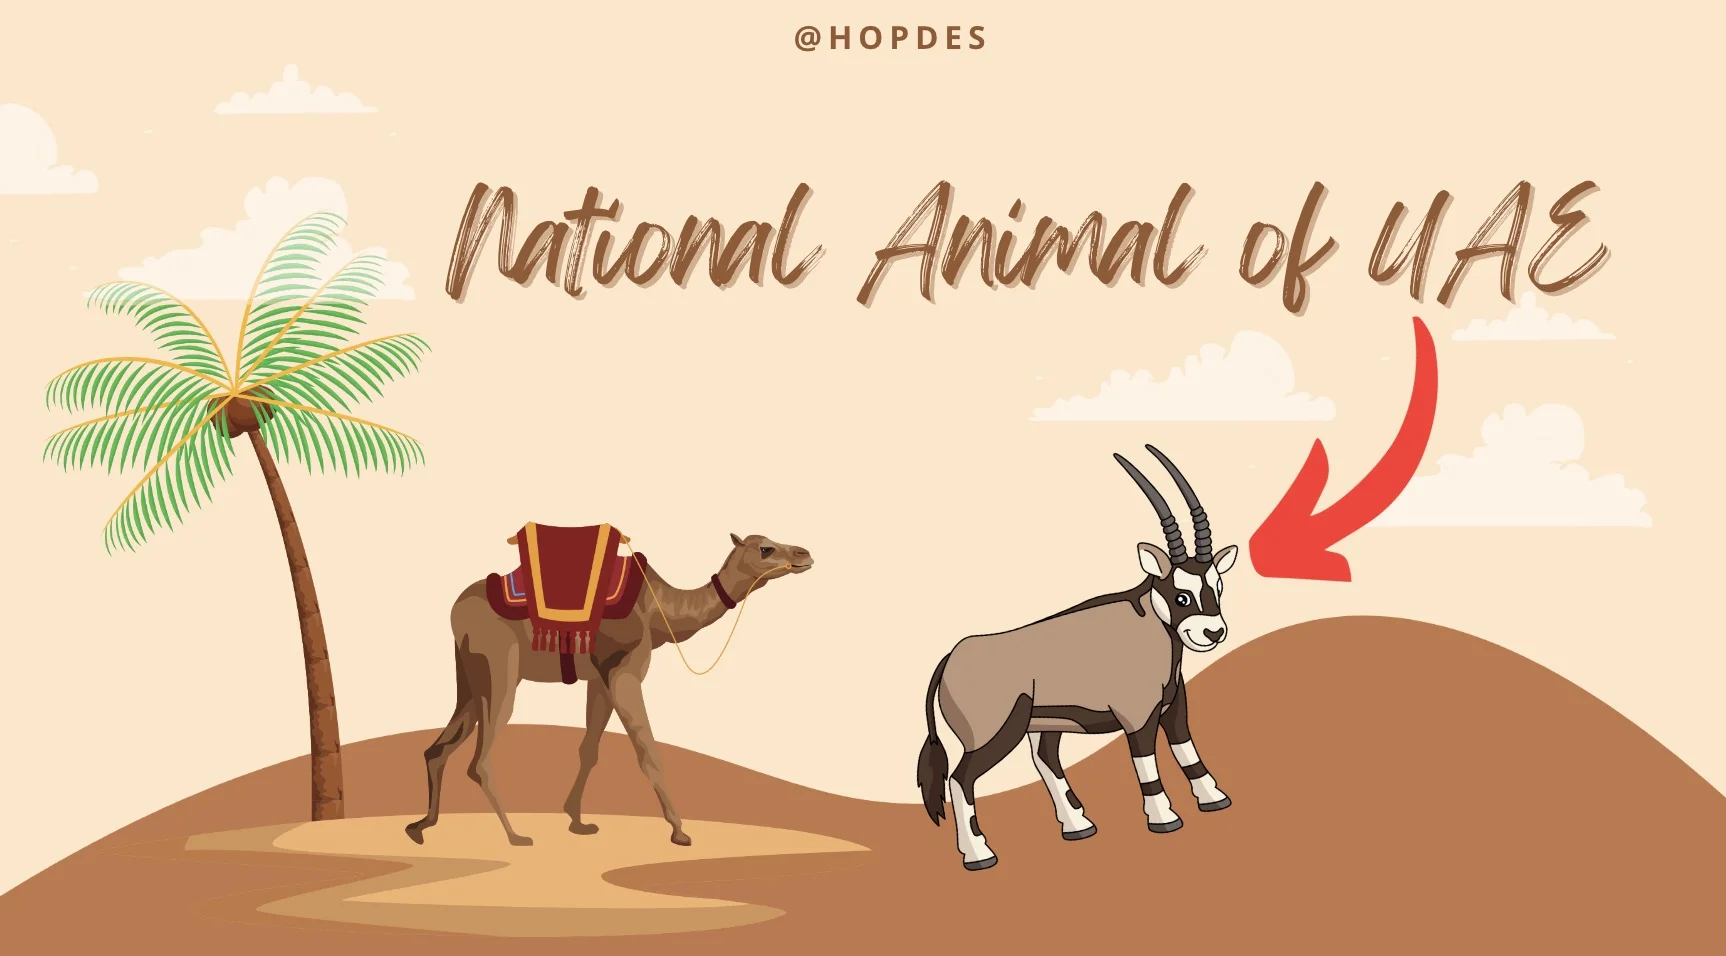 National Animal of UAE